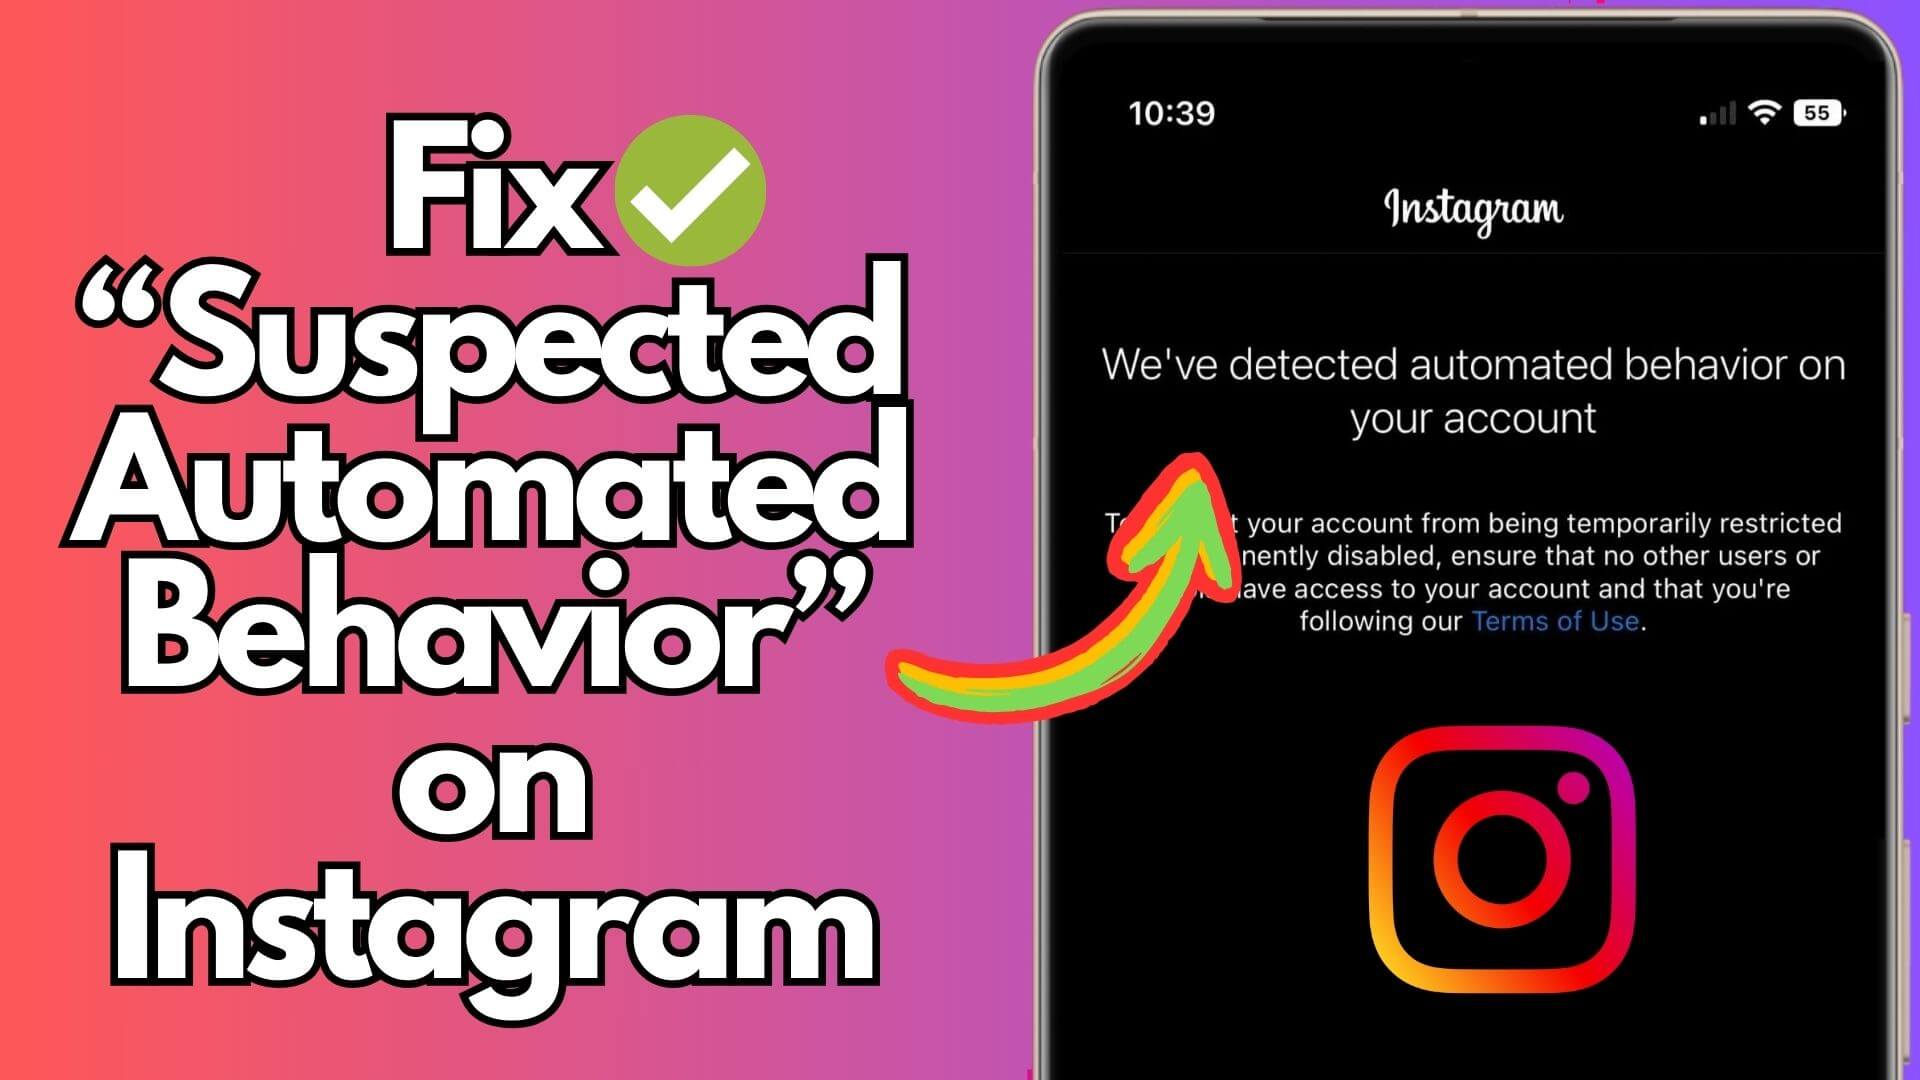 Fix ‘Suspected Automated Behavior’ On Instagram